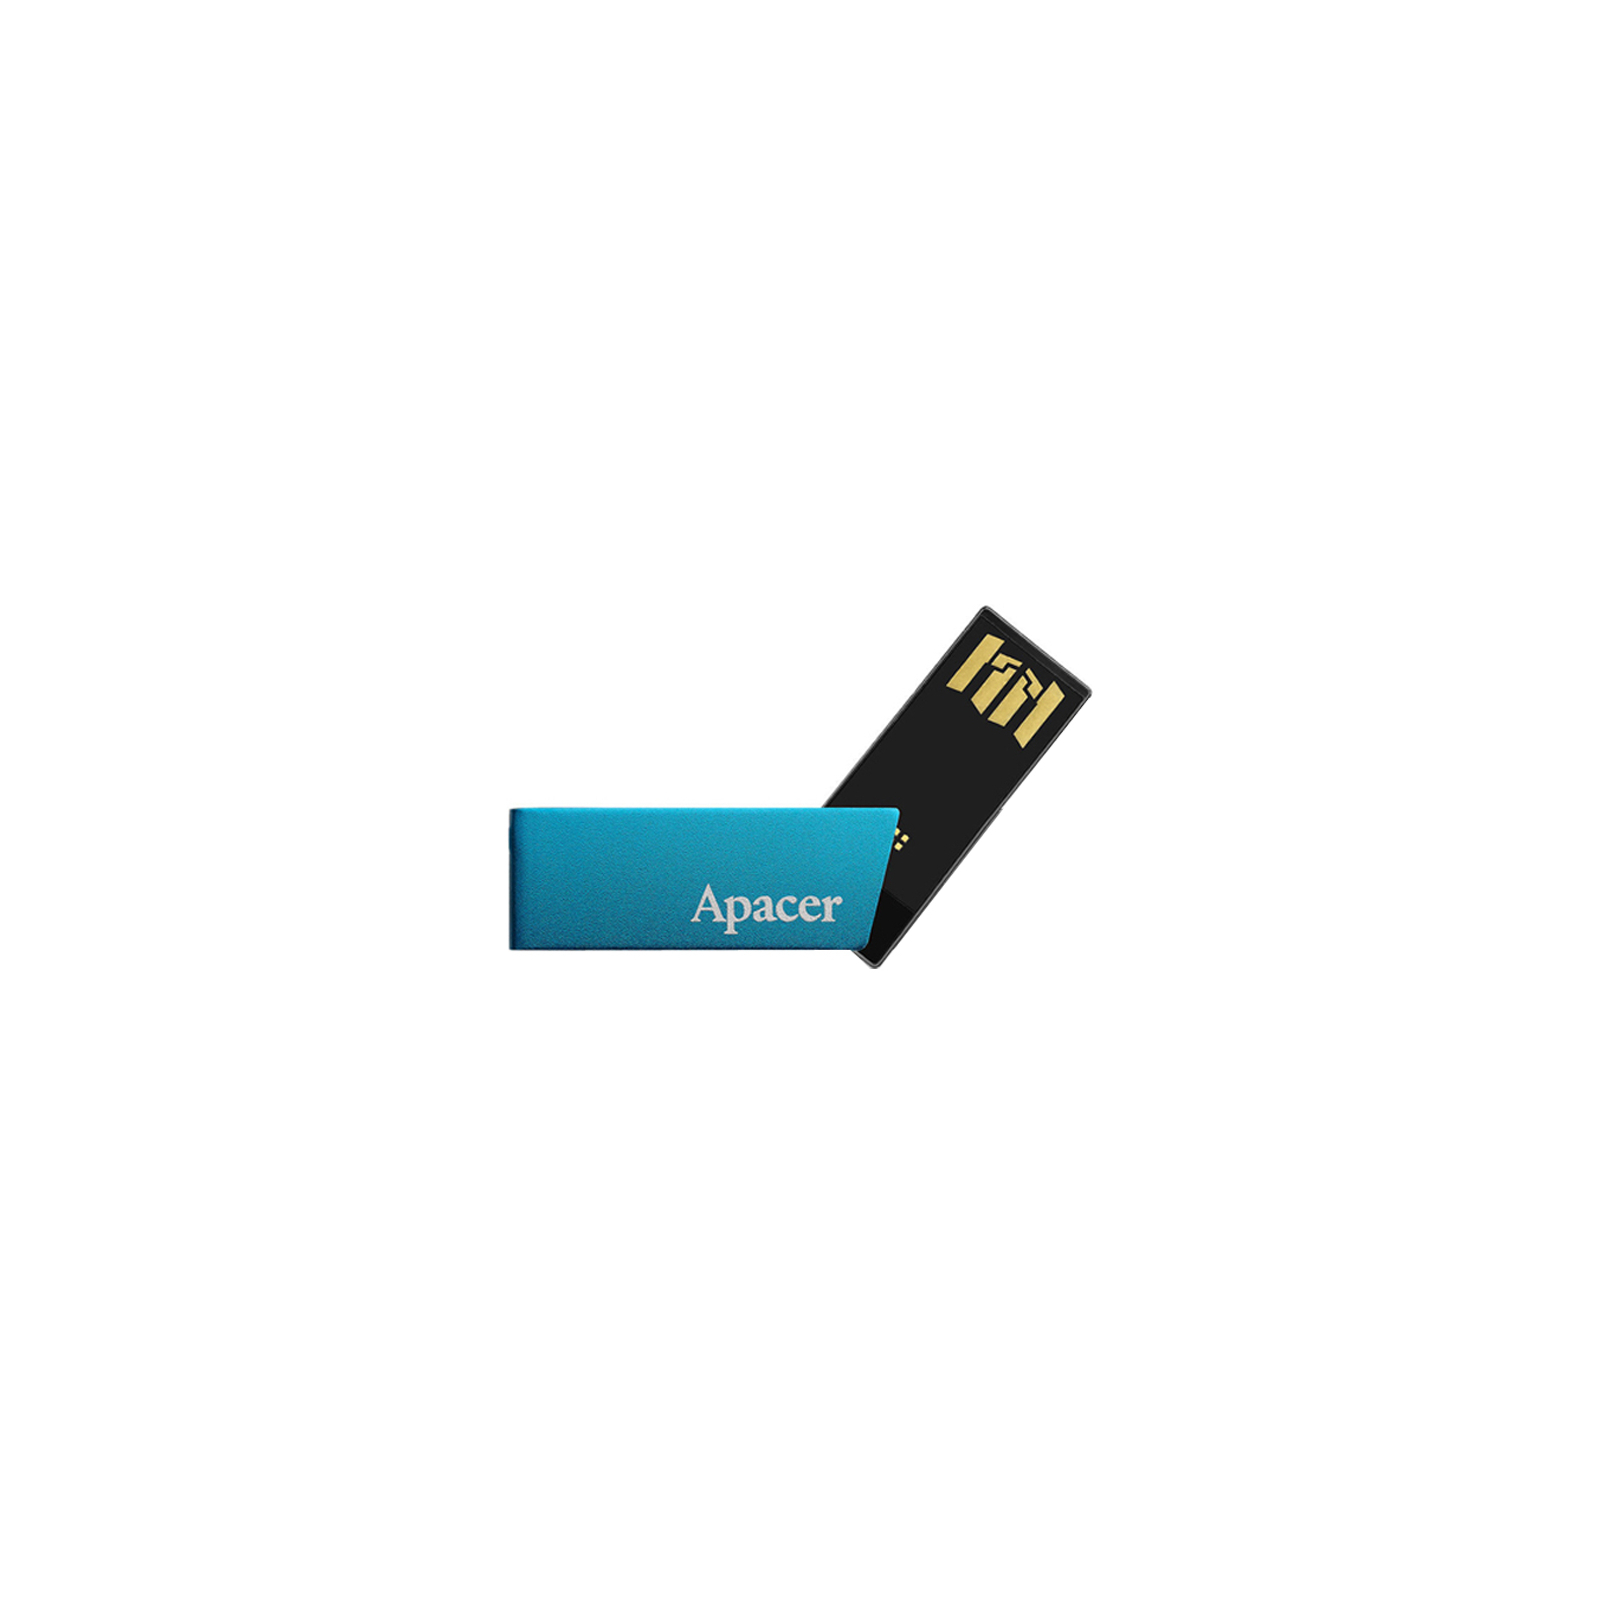 USB флеш накопитель Apacer 16GB AH130 Orange RP USB2.0 (AP16GAH130T-1) изображение 4